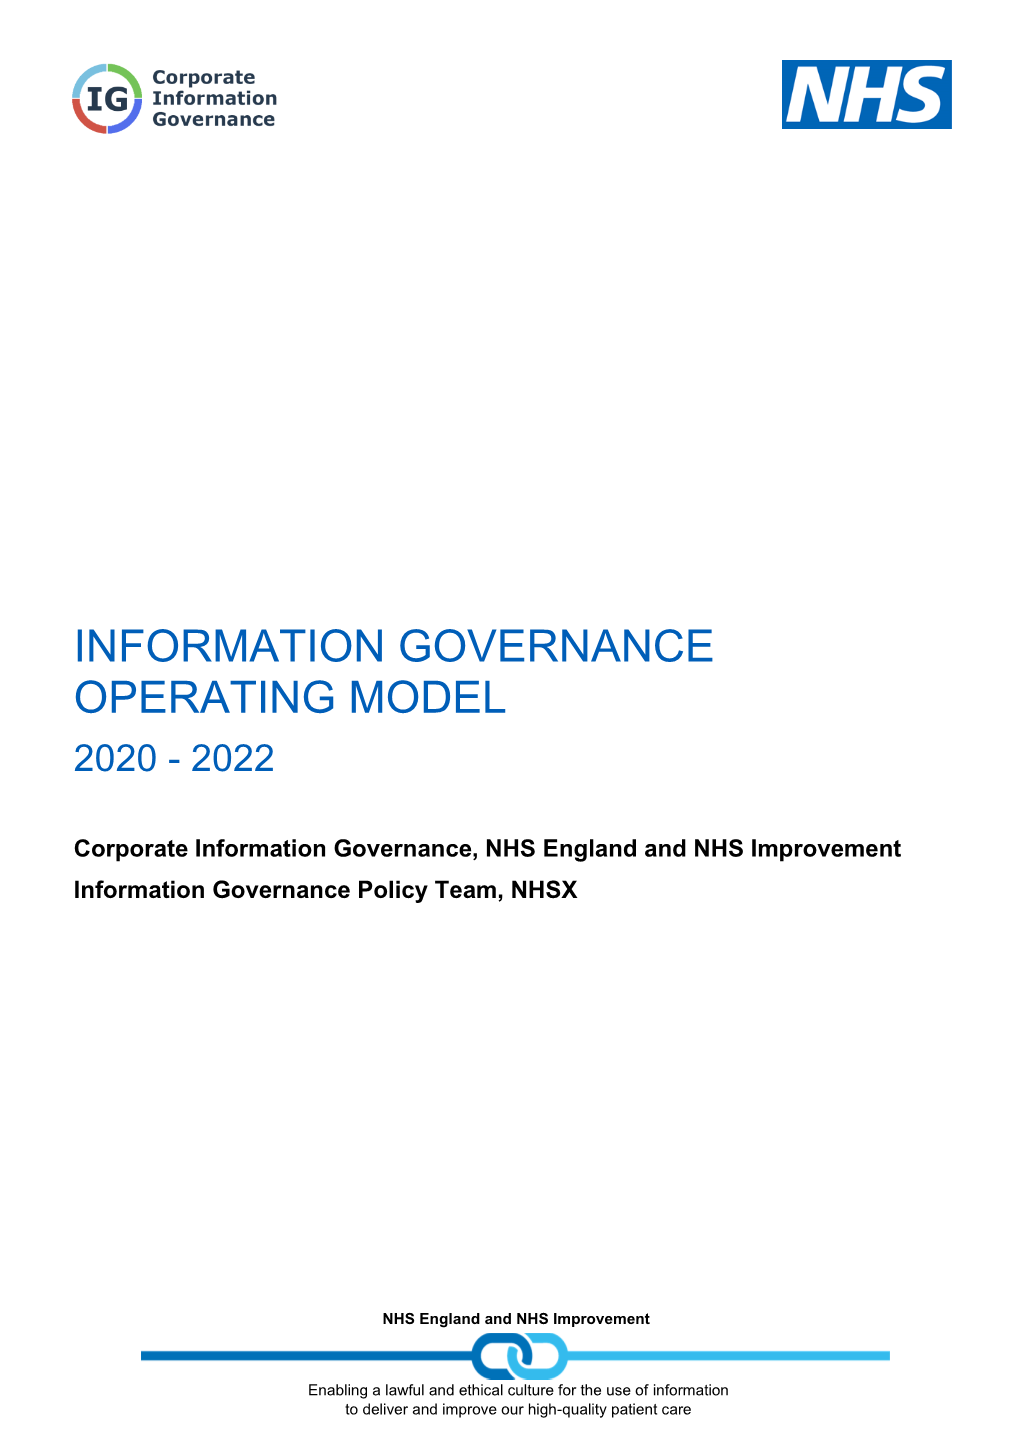 Information Governance Operating Model 2020-2022